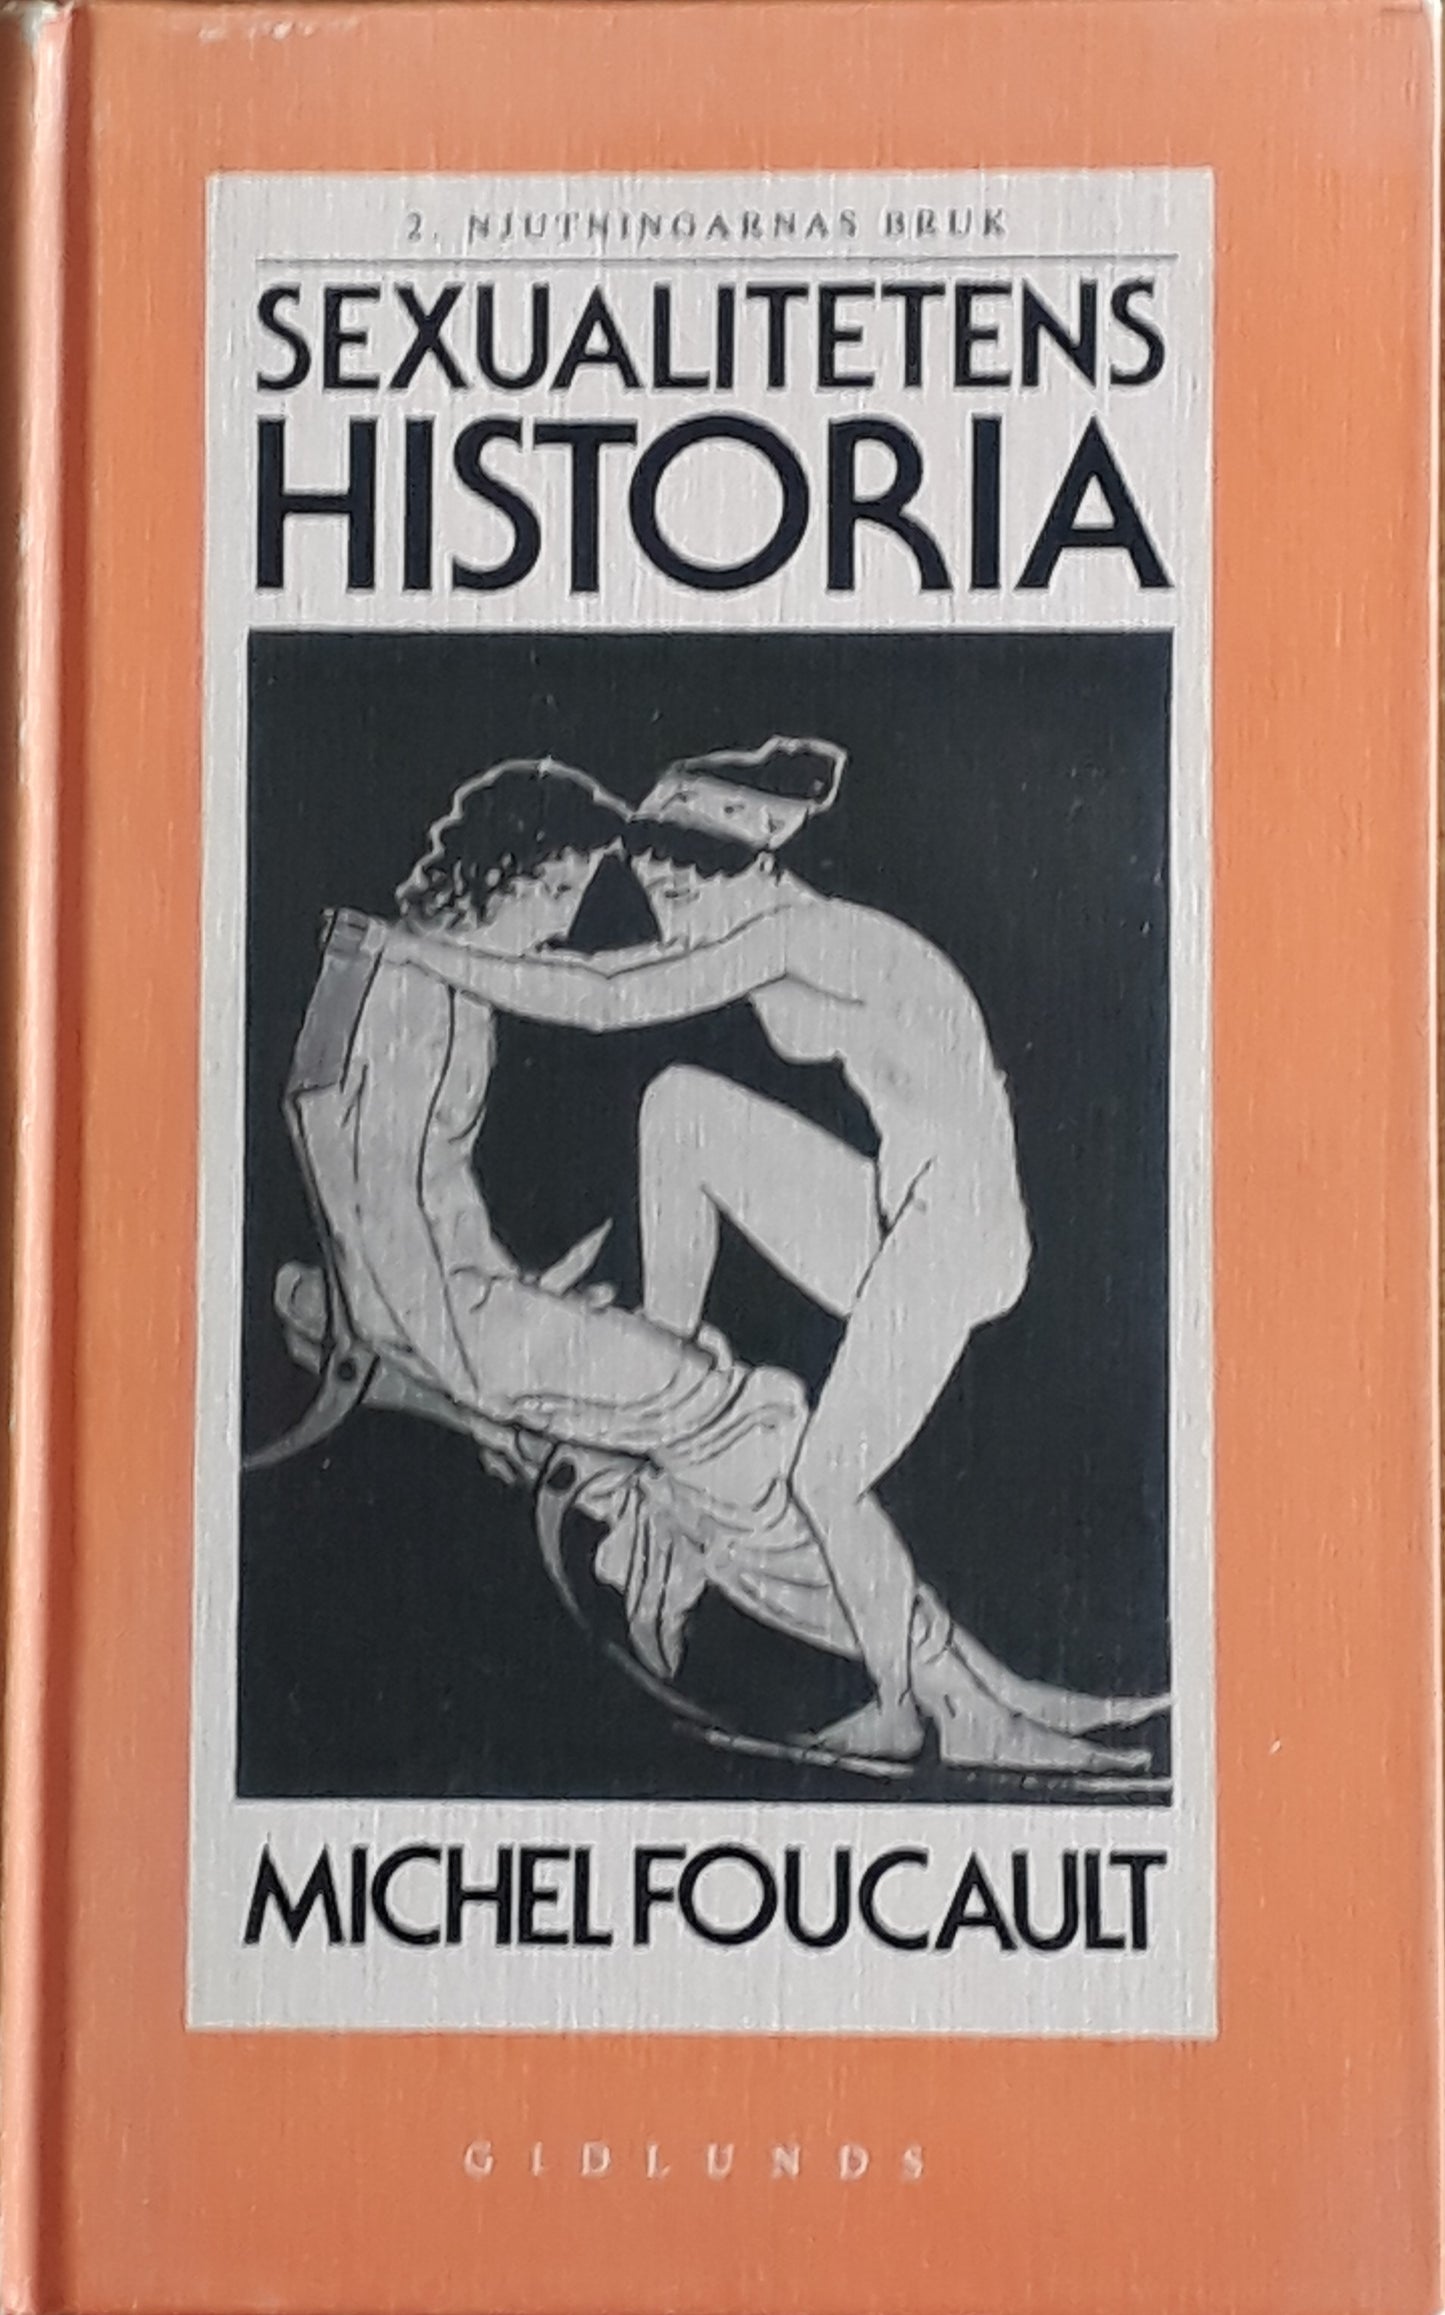 Sexualitetens historia. 2. Njutningarnas bruk - Foucault, Michel